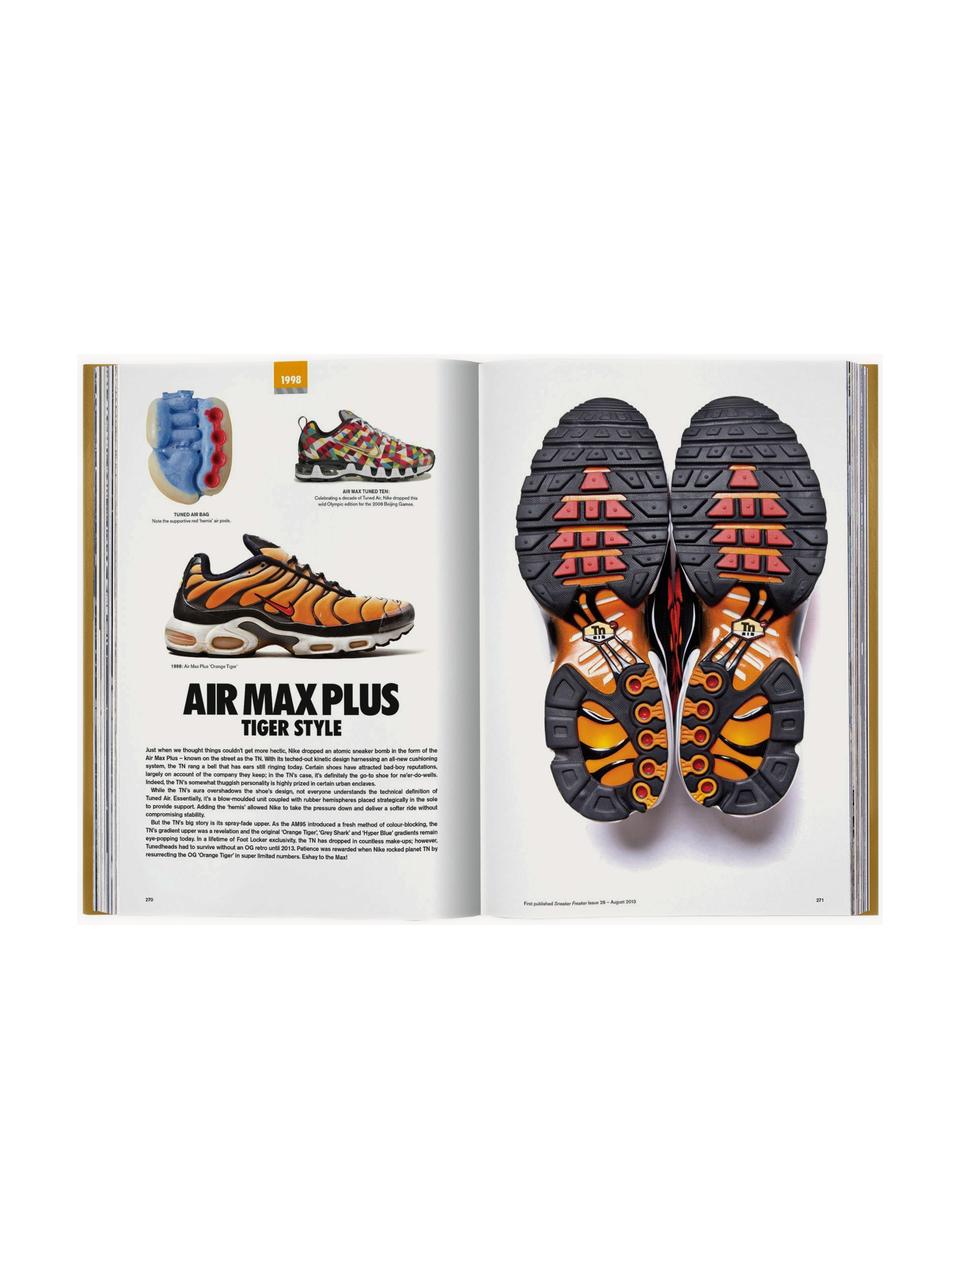 Obrázková kniha Sneaker Freaker: The Ultimate Sneaker Book, Papír, pevná vazba, Sneaker Freaker, Š 21 cm, V 32 cm